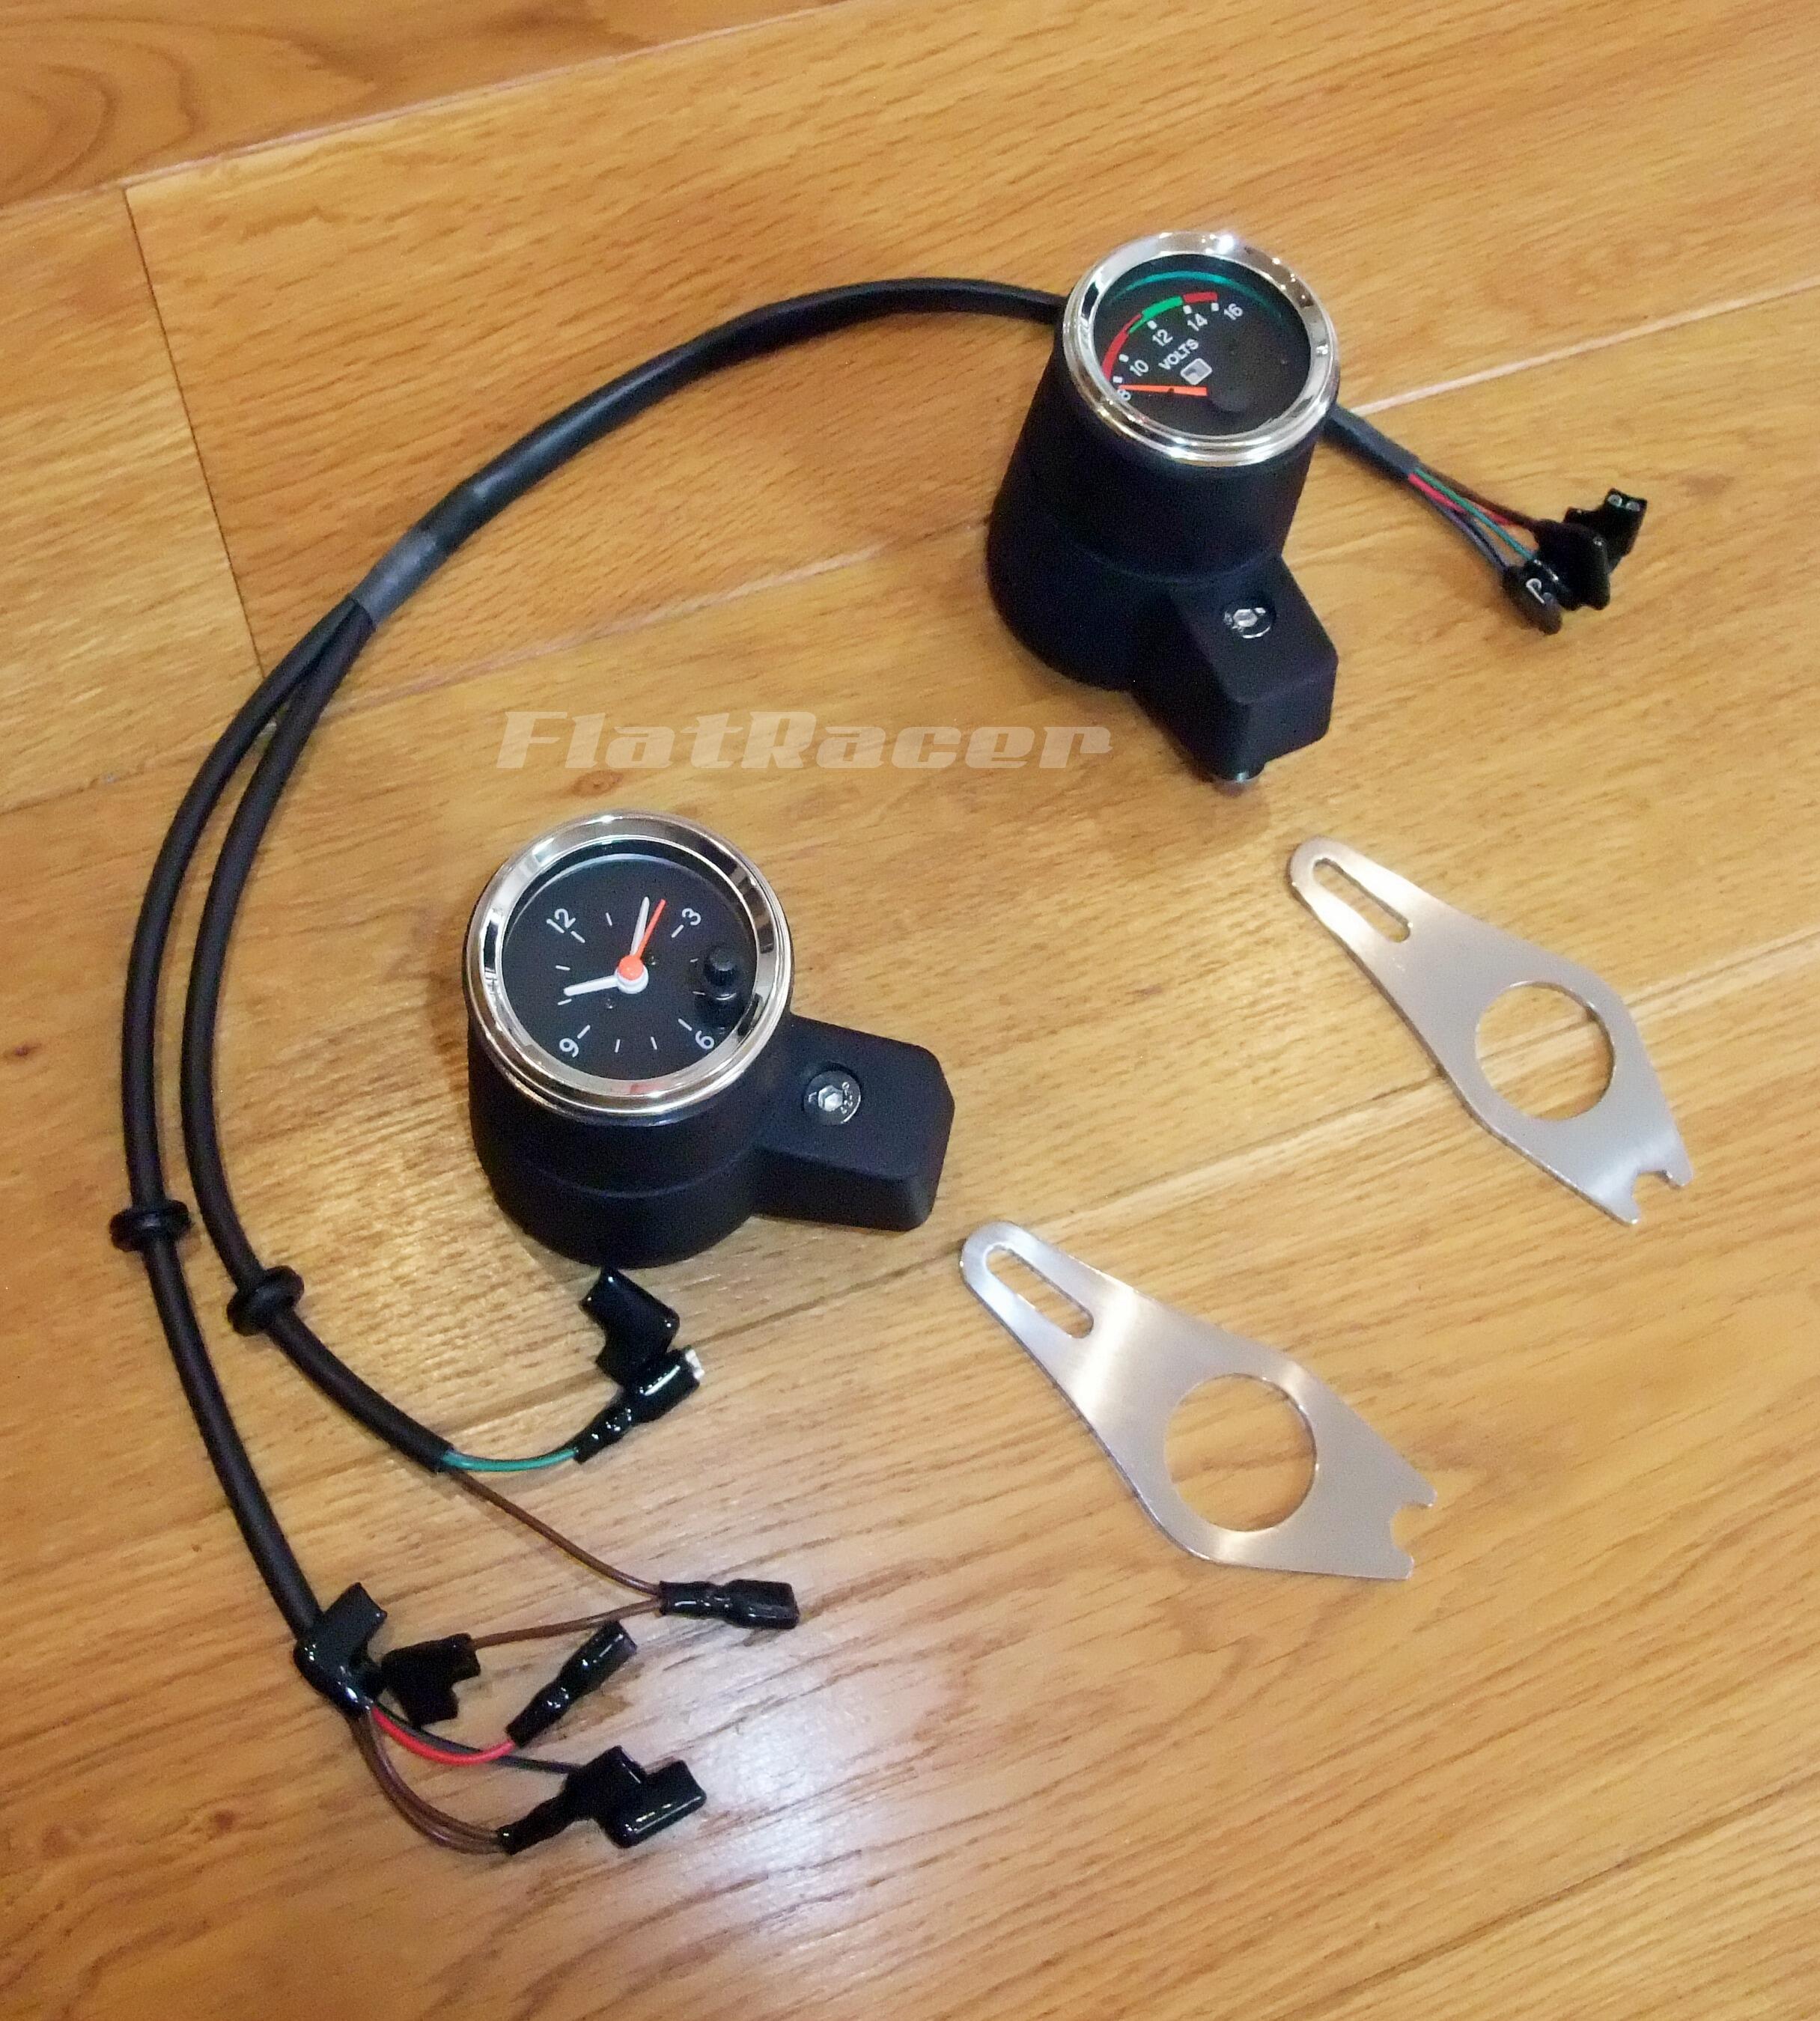 FlatRacer BMW Alternative Clock + Voltmeter (Chrome) Pod Kit - Replaces BMW 62131243642 + 62131357868 + 61121357697 + 61121357703 + 31421240651